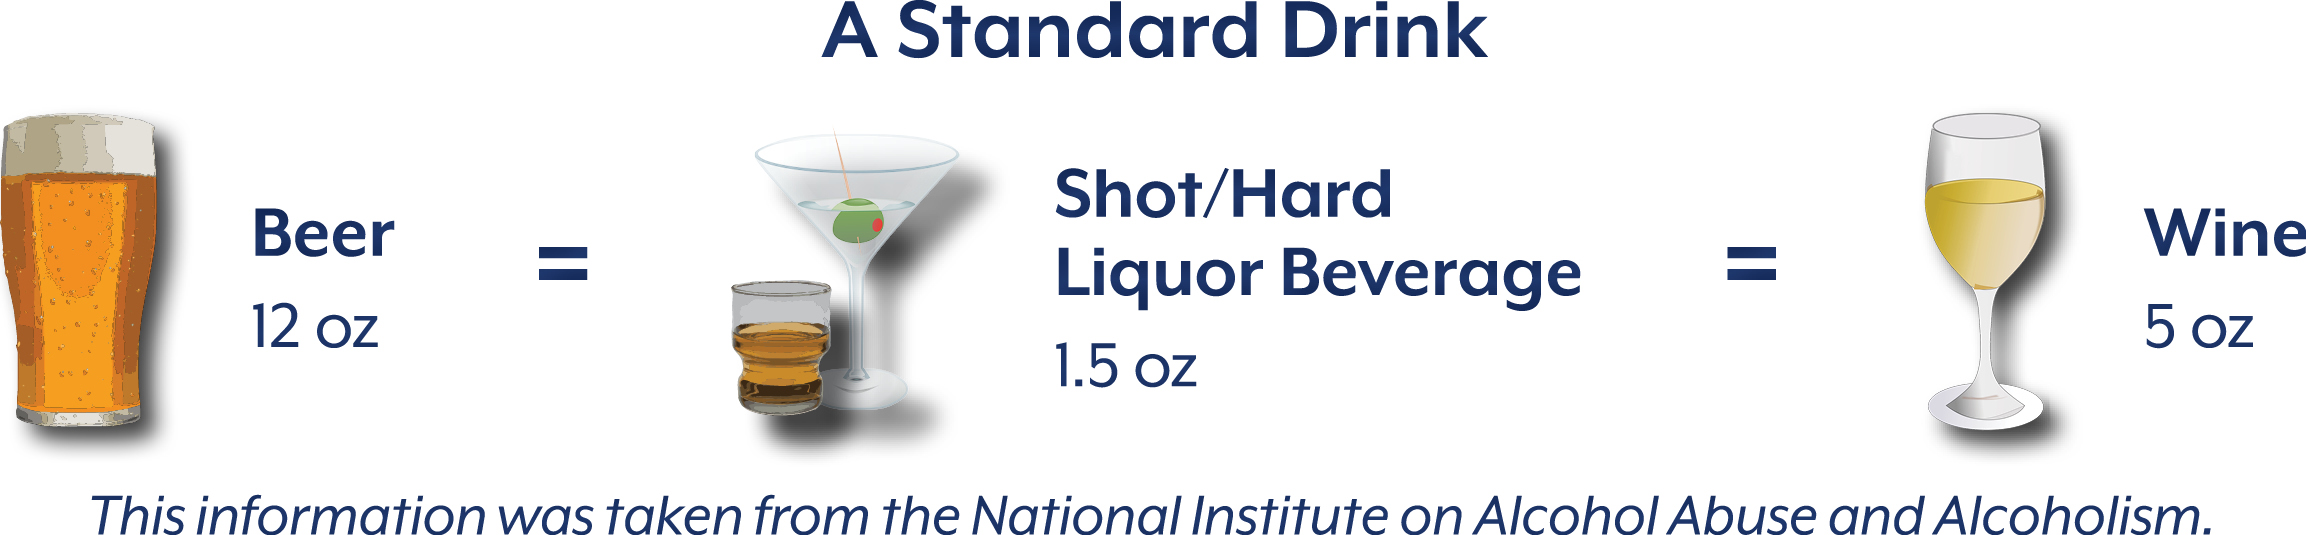 A Standard Drink.jpg